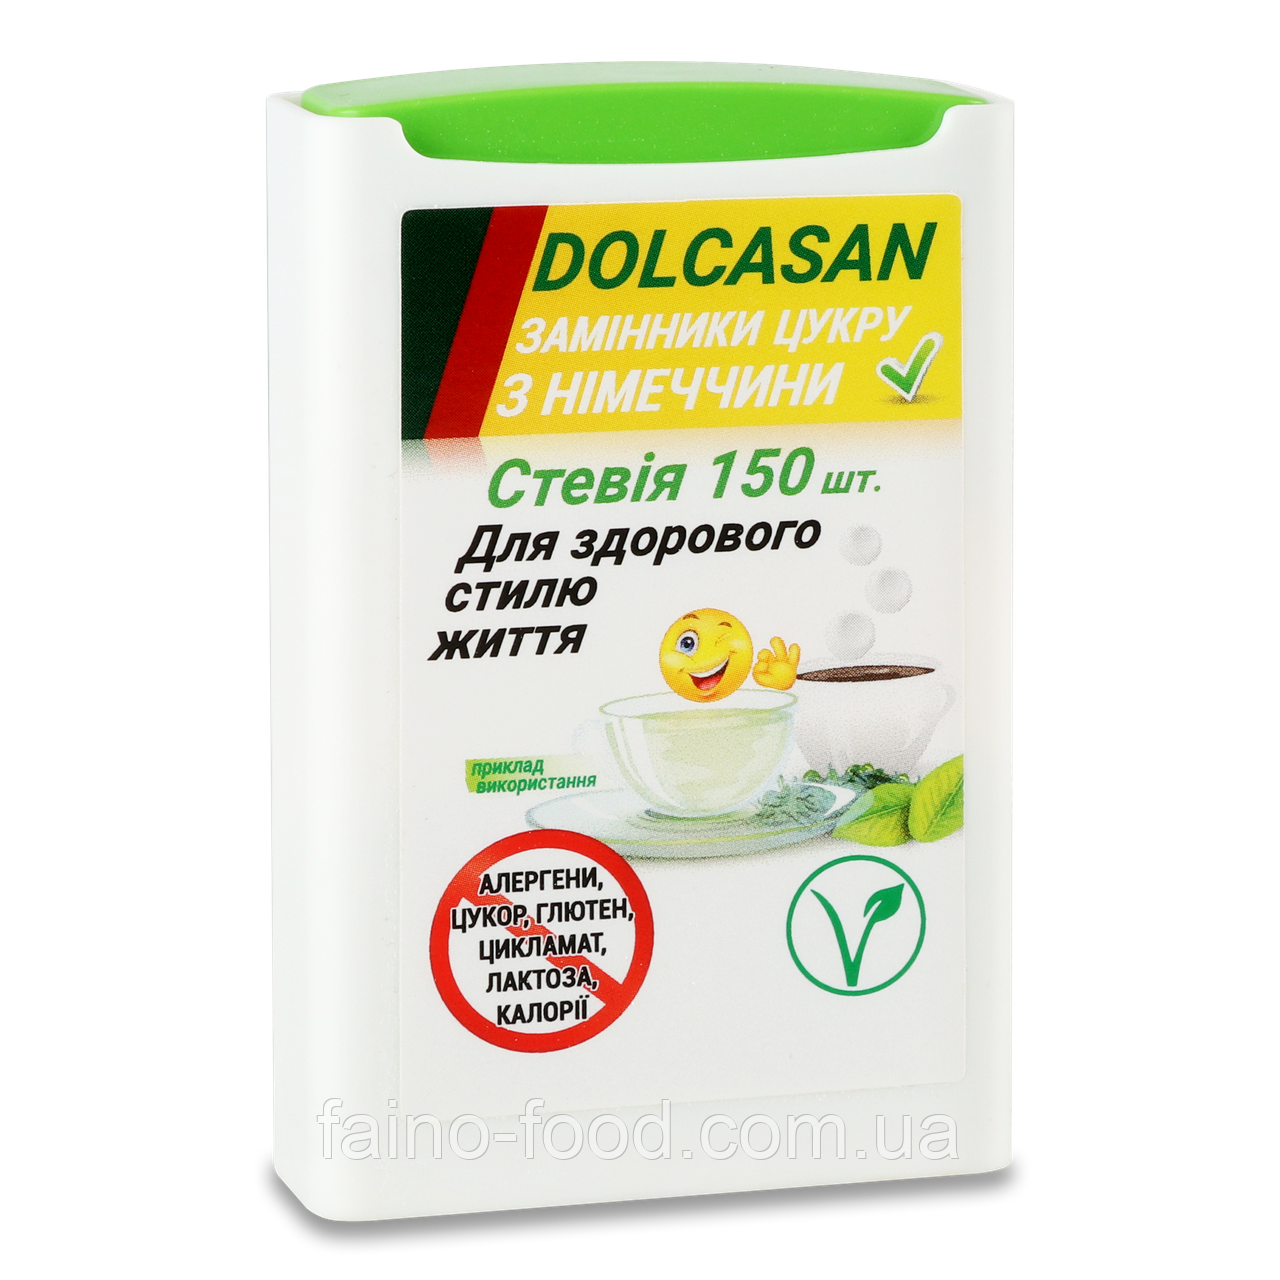 Замінник цукру "DOLCASAN" (на основі Стевії), 150 табл.